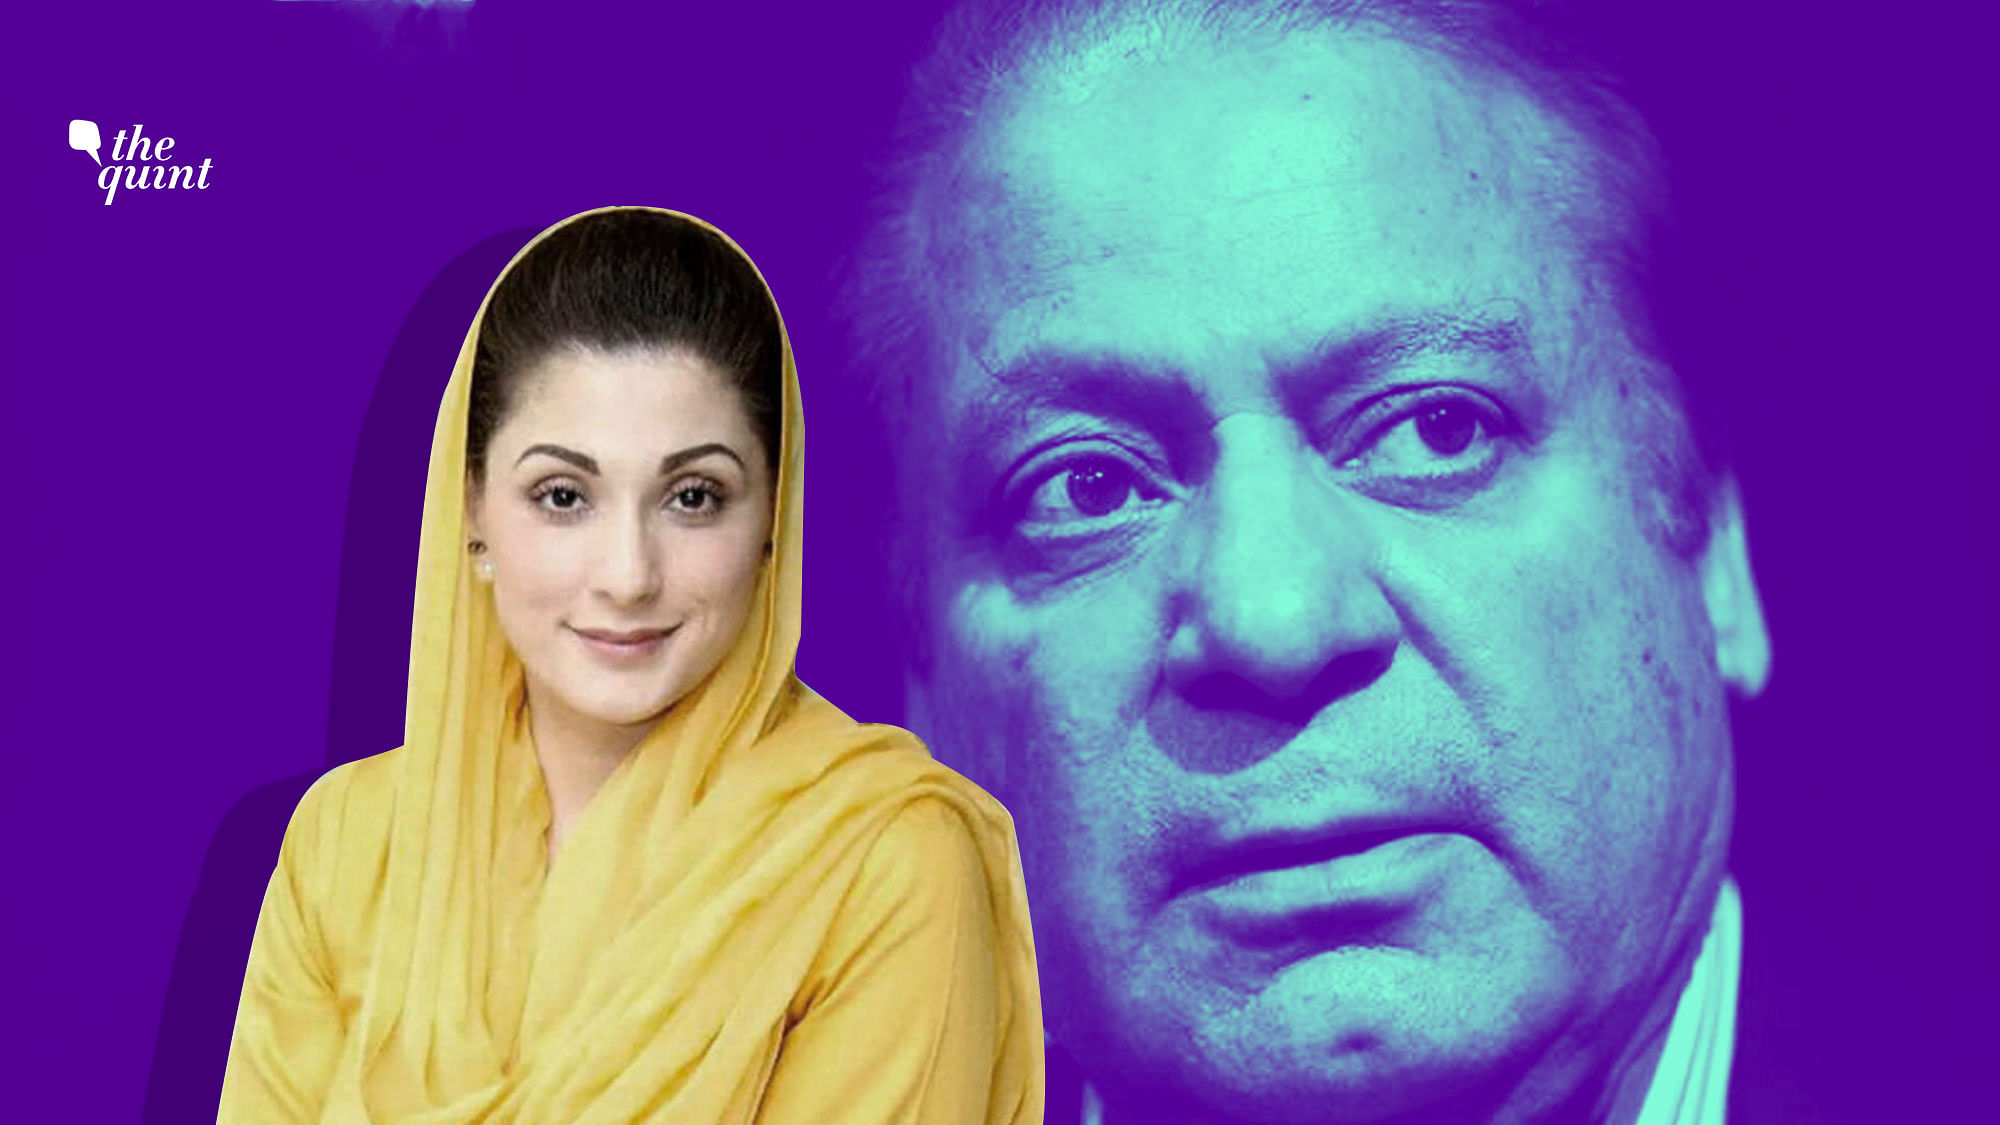 Images of former Pakistan PM Nawaz Sharif and his daughter Maryam Nawaz used for representational purposes.